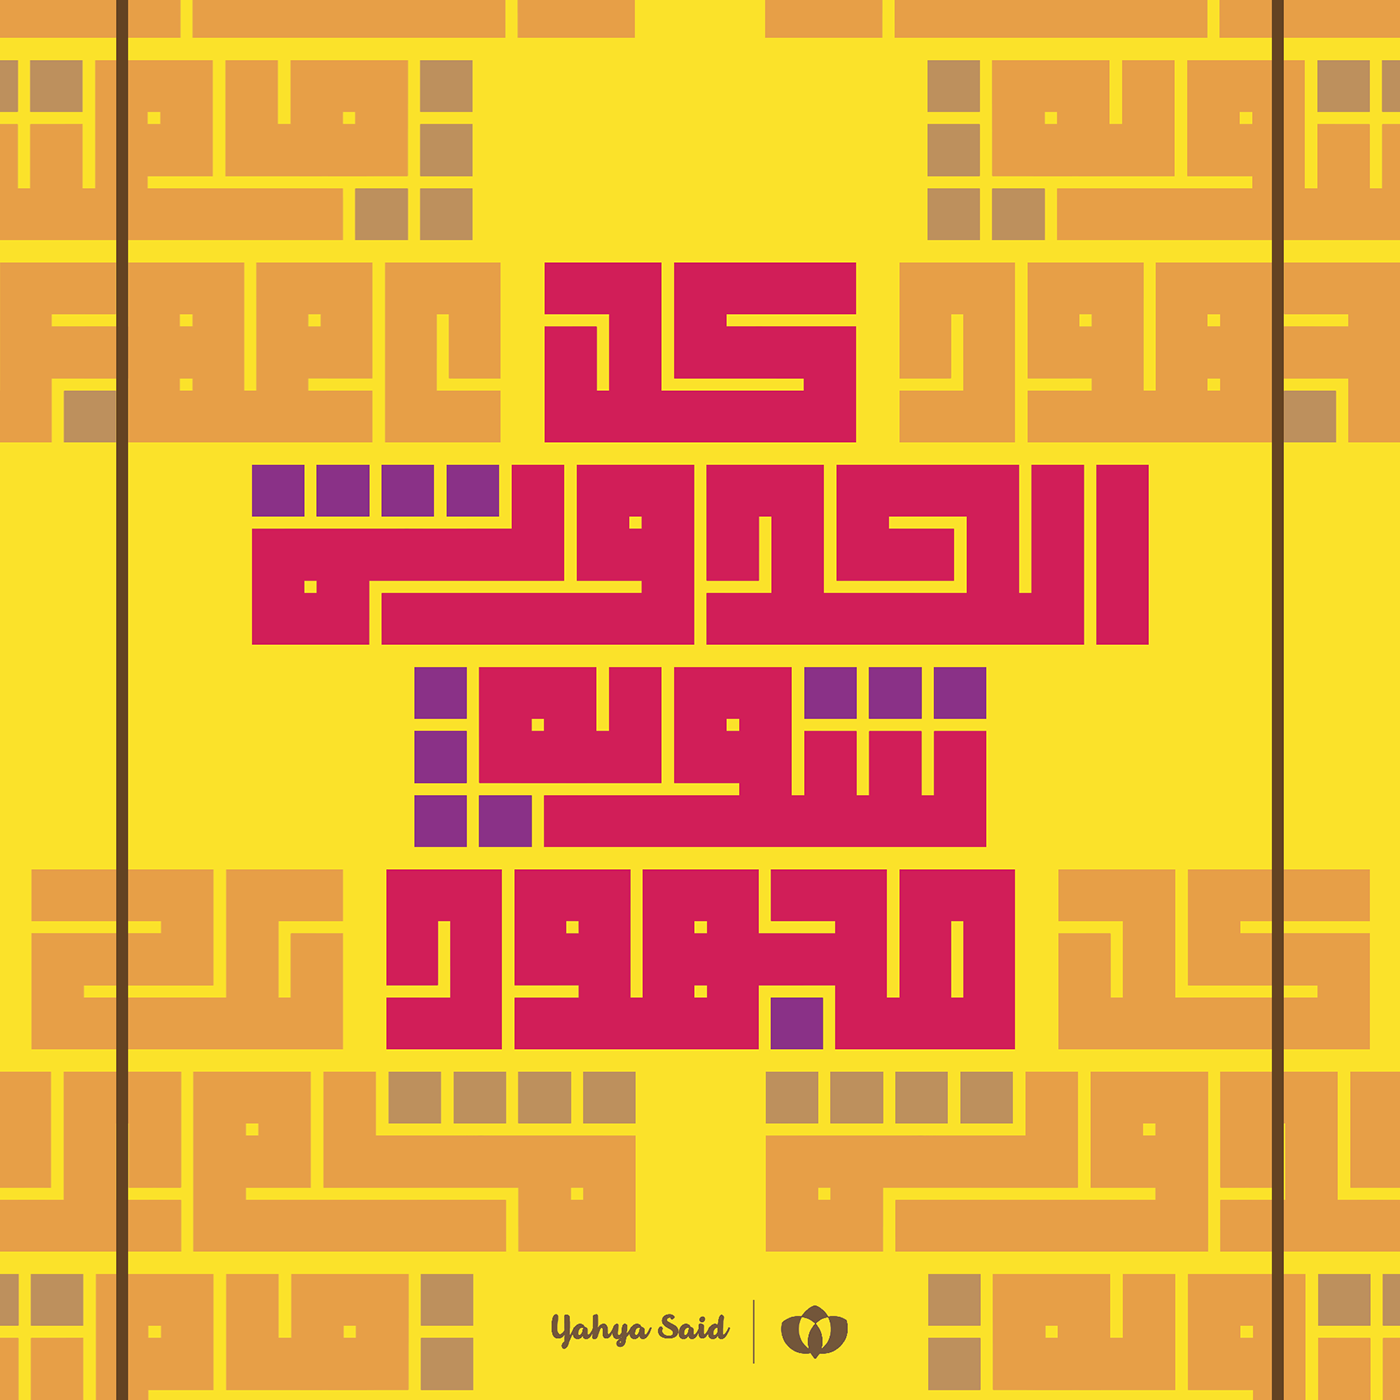 des font Kufi typo calligra art عربي type